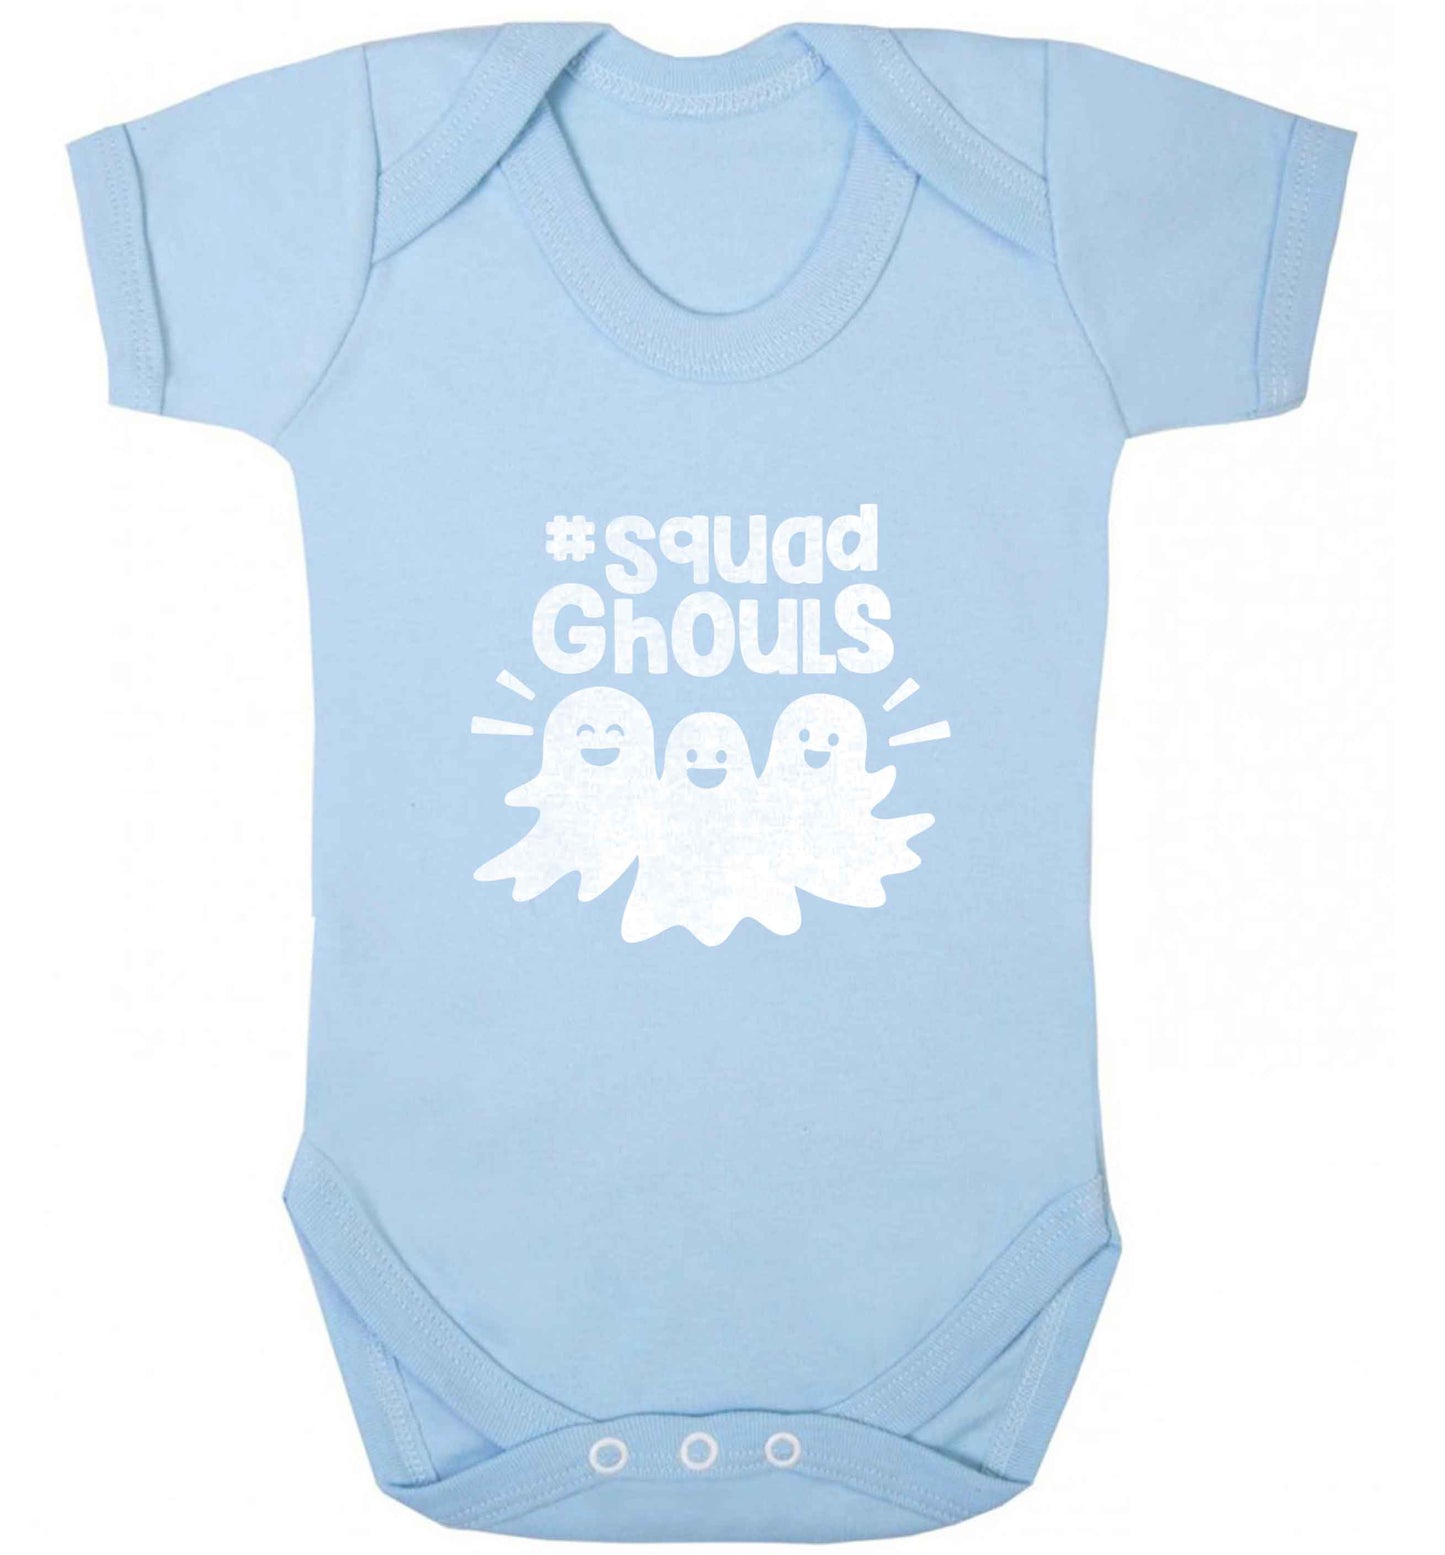 Squad ghouls Kit baby vest pale blue 18-24 months